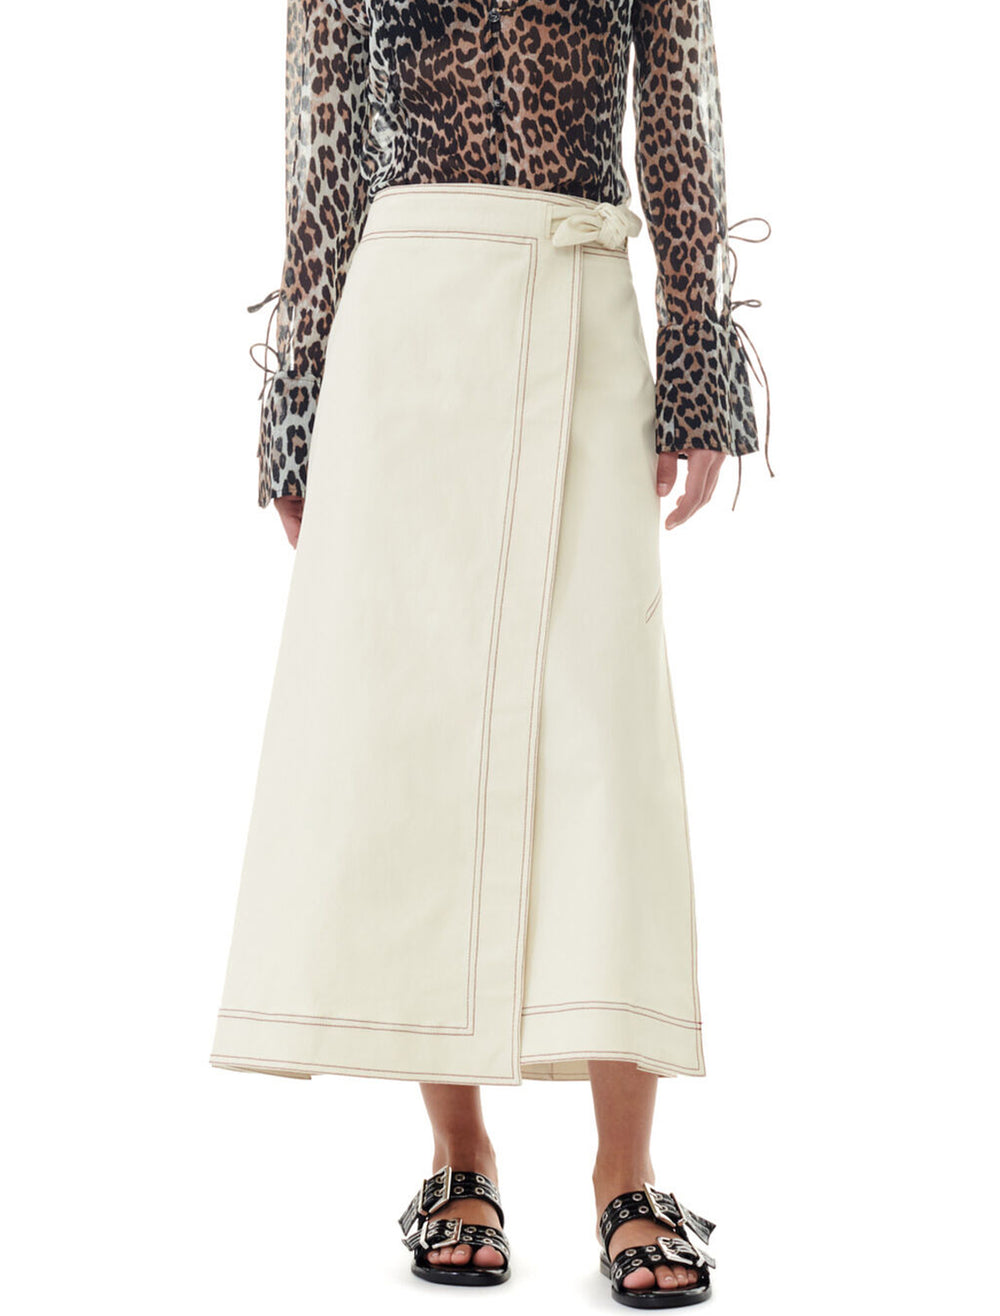 Model wearing GANNI's herringbone canvas long wrap skirt in summer sand.